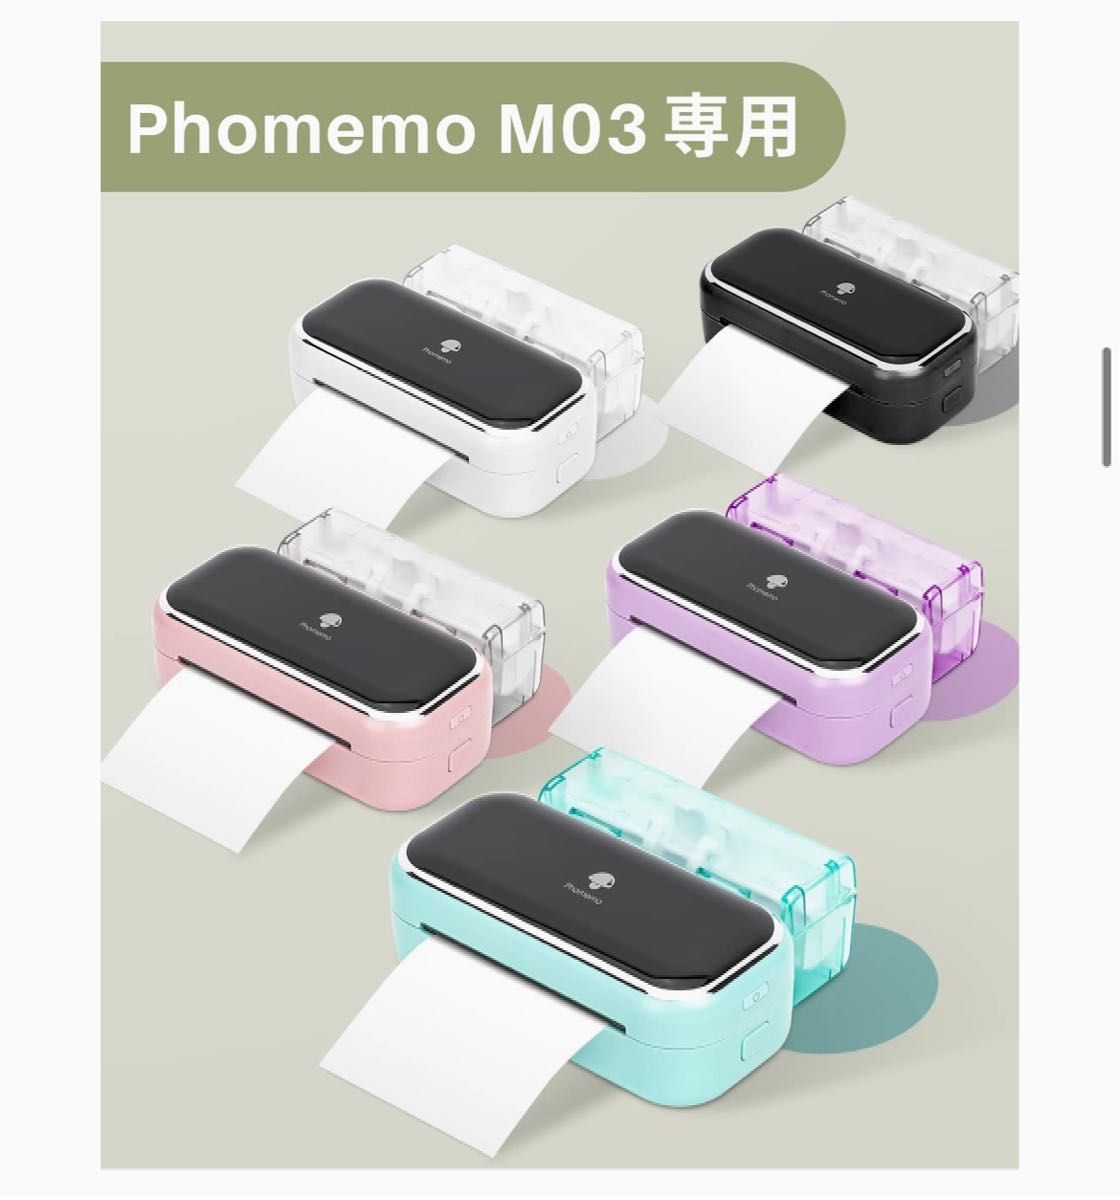 Phomemo M03用紙 純正カードストック 粘着性100枚 感熱紙 テープ